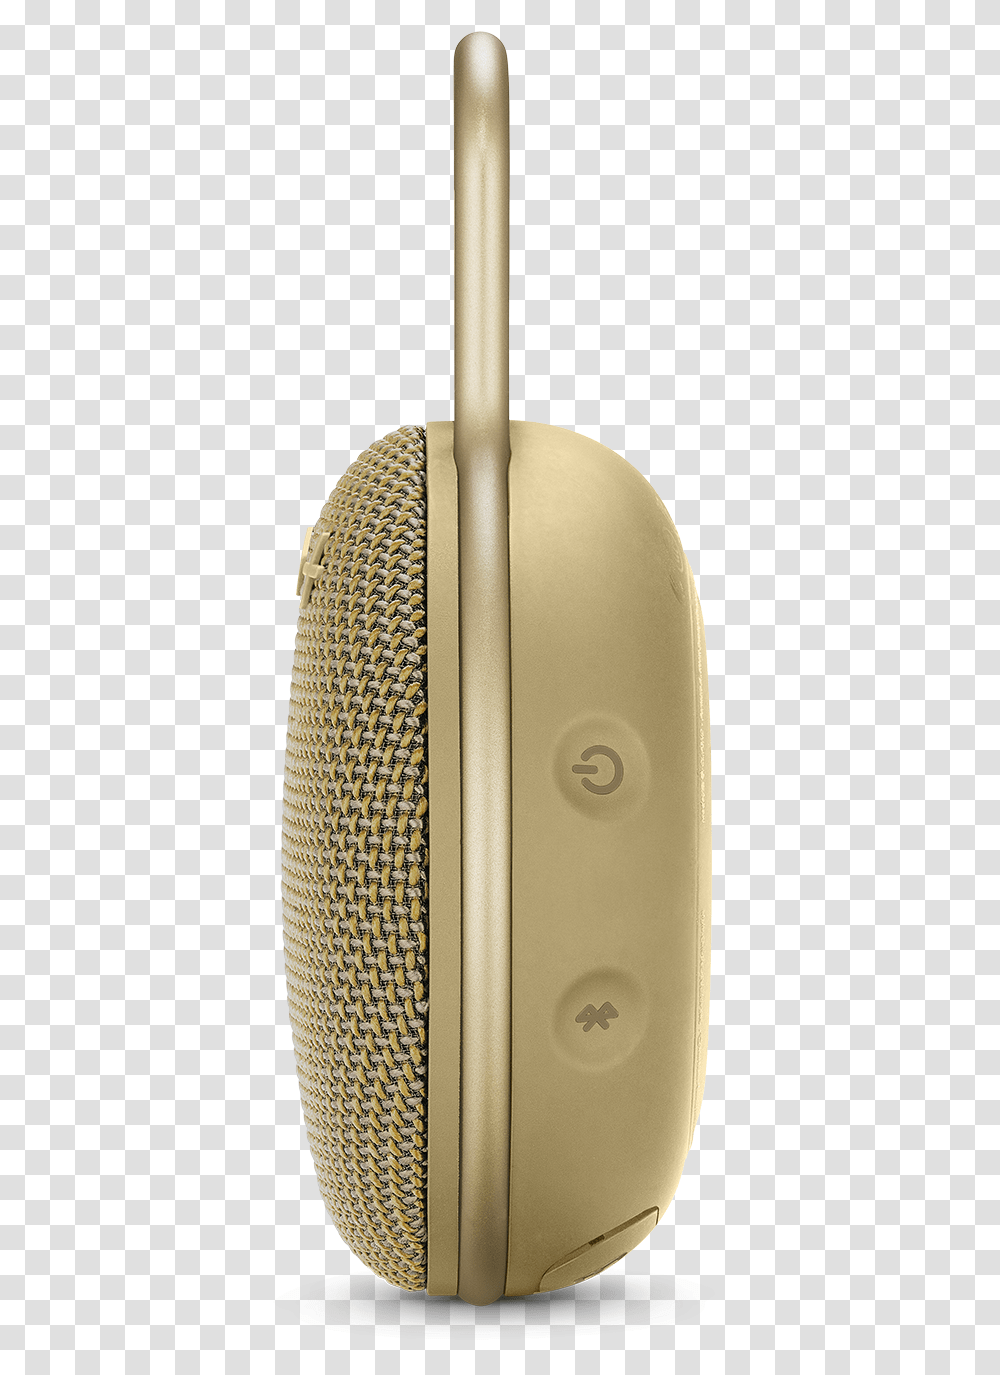 Jbl Clip 3 Jbl Clip 3 Gold, Electrical Device, Microphone Transparent Png